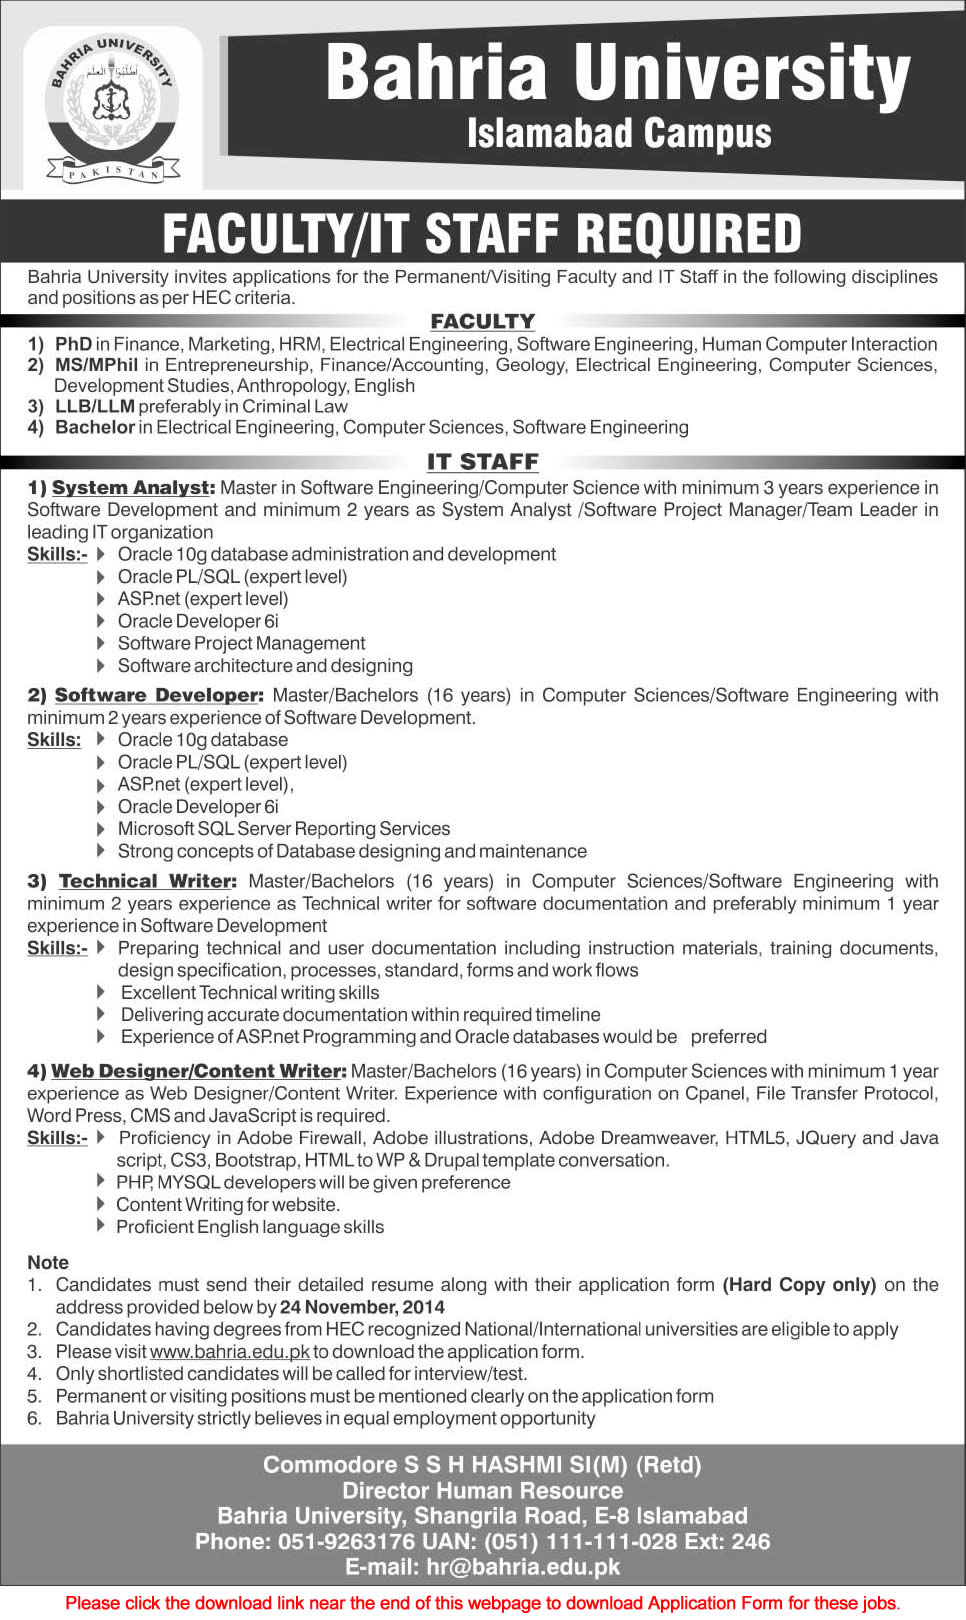 Bahria University Islamabad Jobs 2014 November Application Form Download